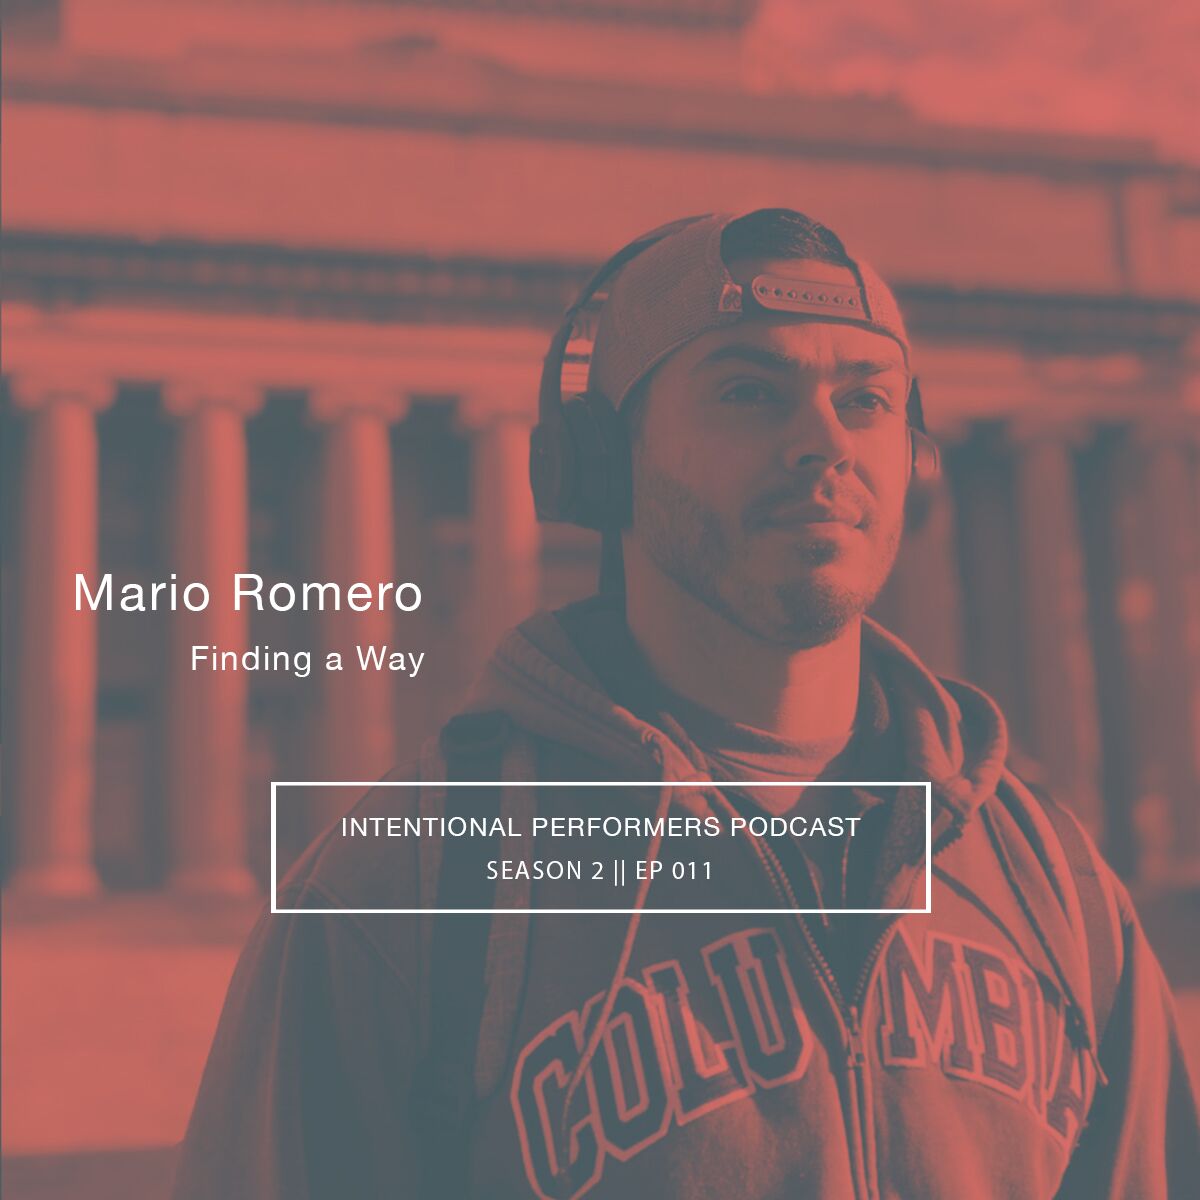 Mario Romero on Finding a Way